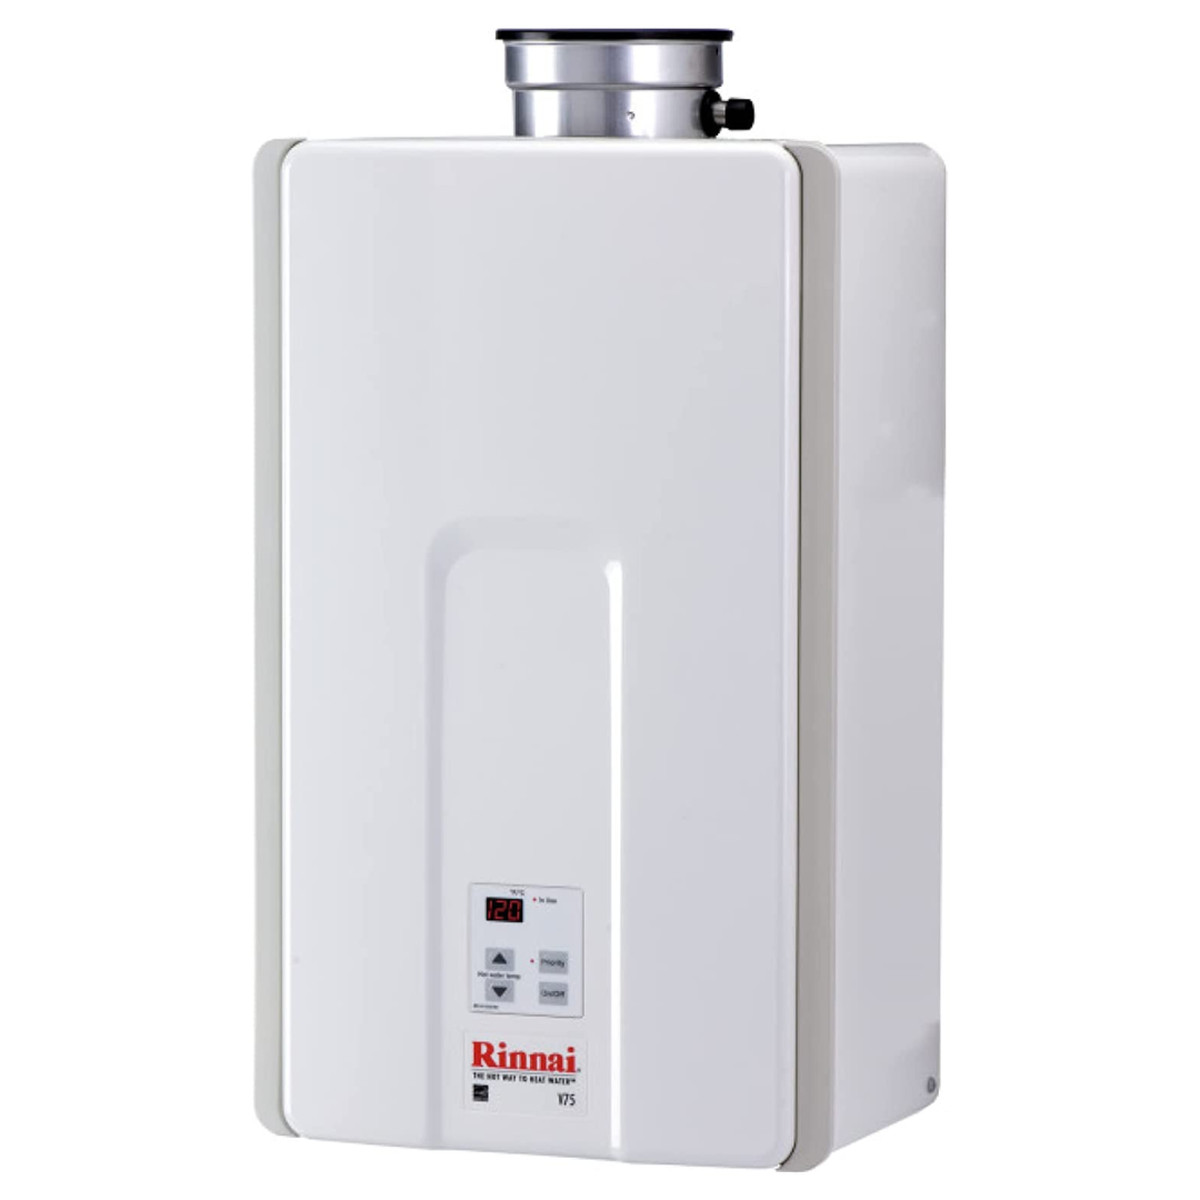 Rinnai Gas Tankless Hot Water Heater